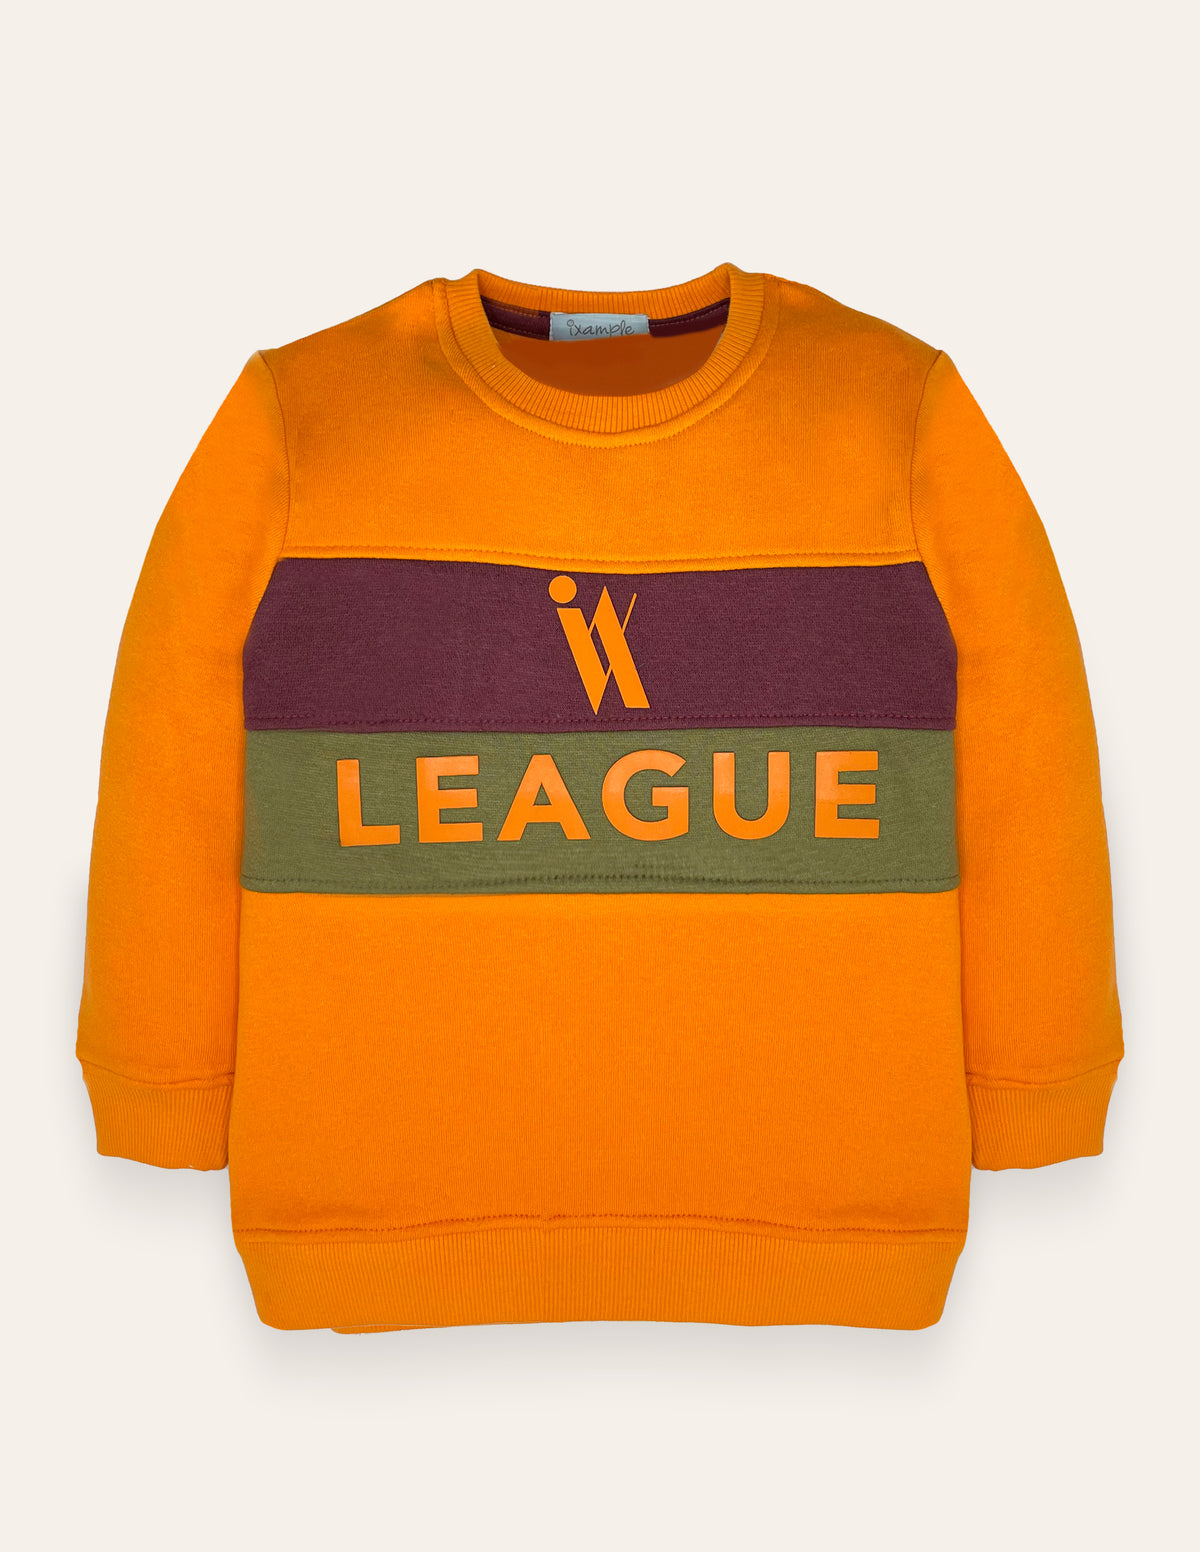 IX League Printed Sweatshirt